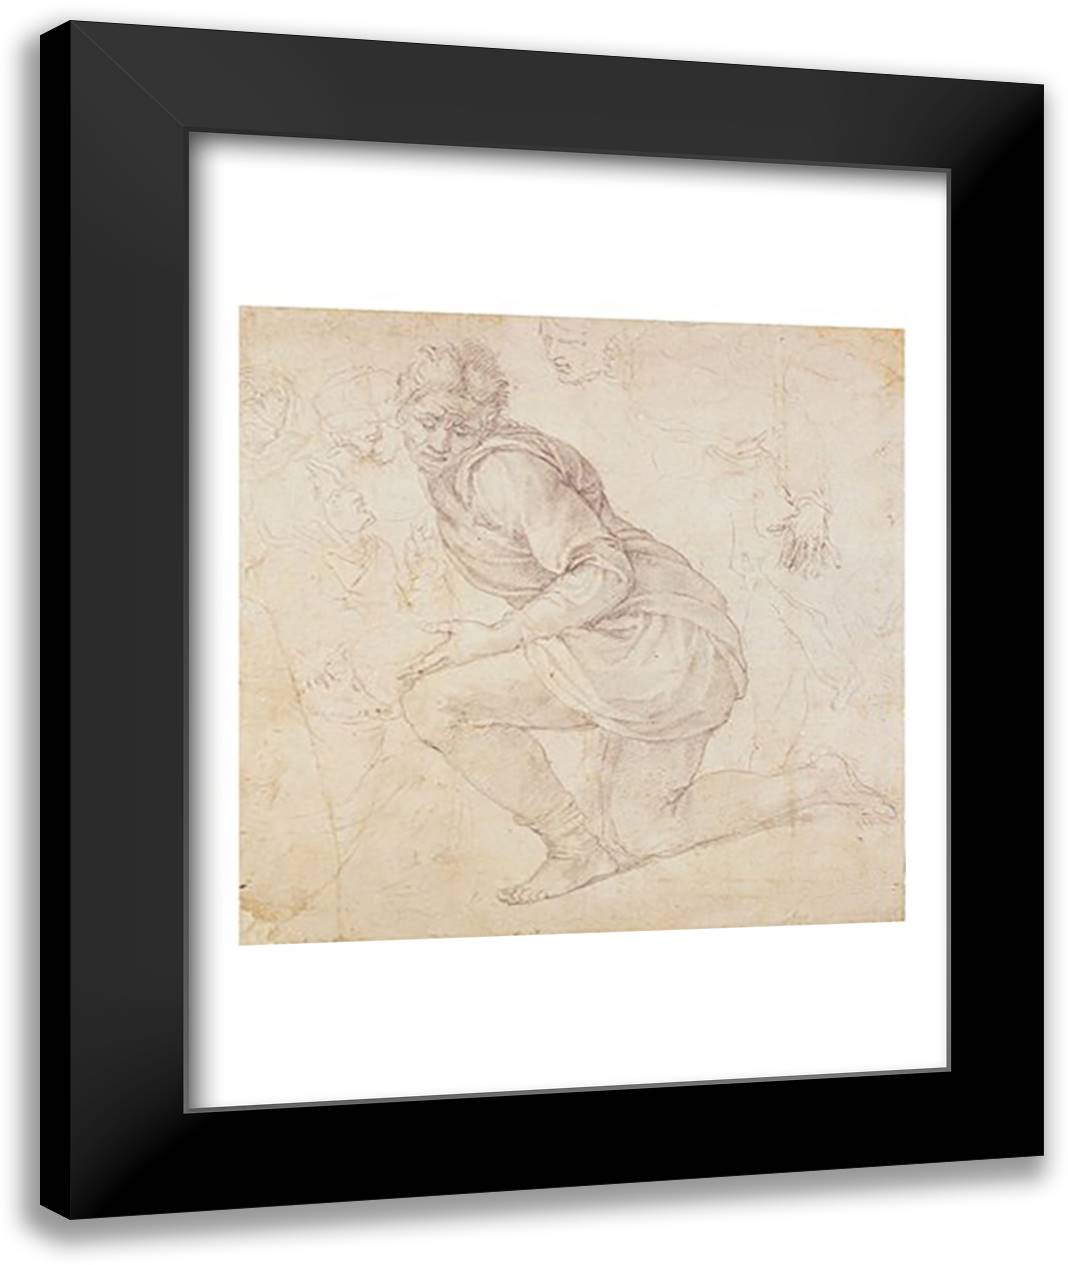 Inv. 5211-75 Fawkener Recto 22x28 Black Modern Wood Framed Art Print Poster by Michelangelo